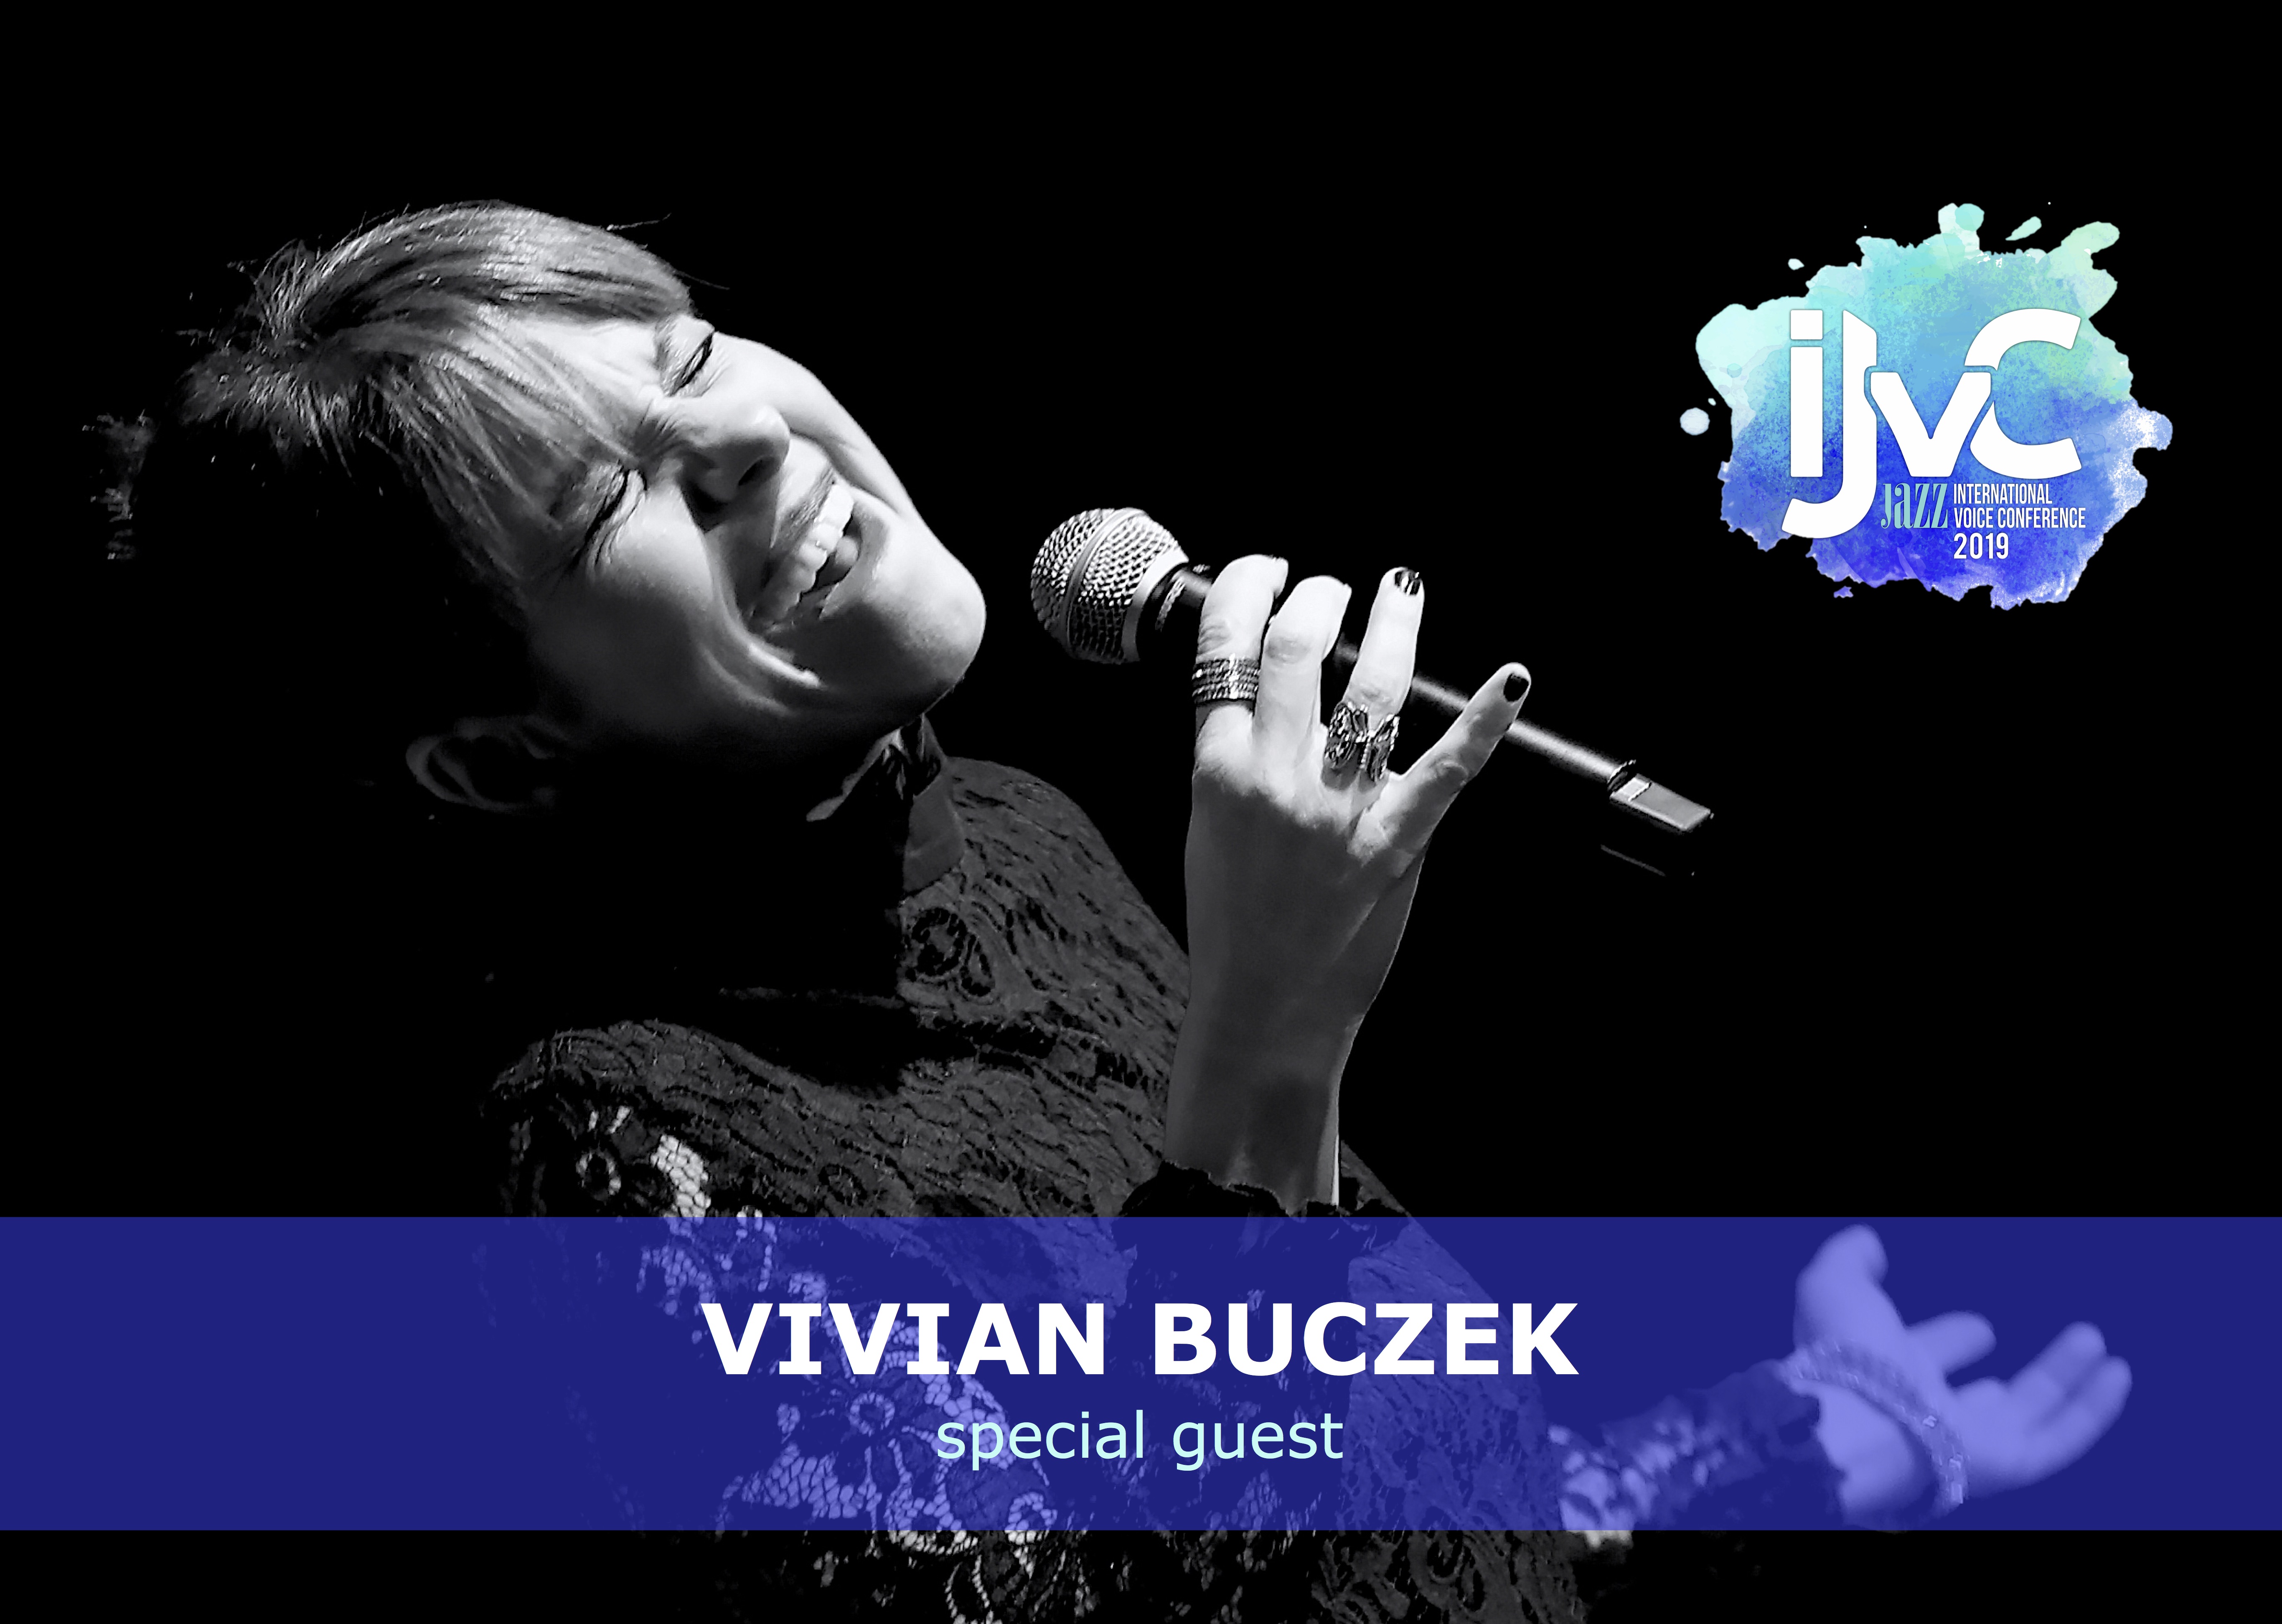 Special guest: Vivian Buczek